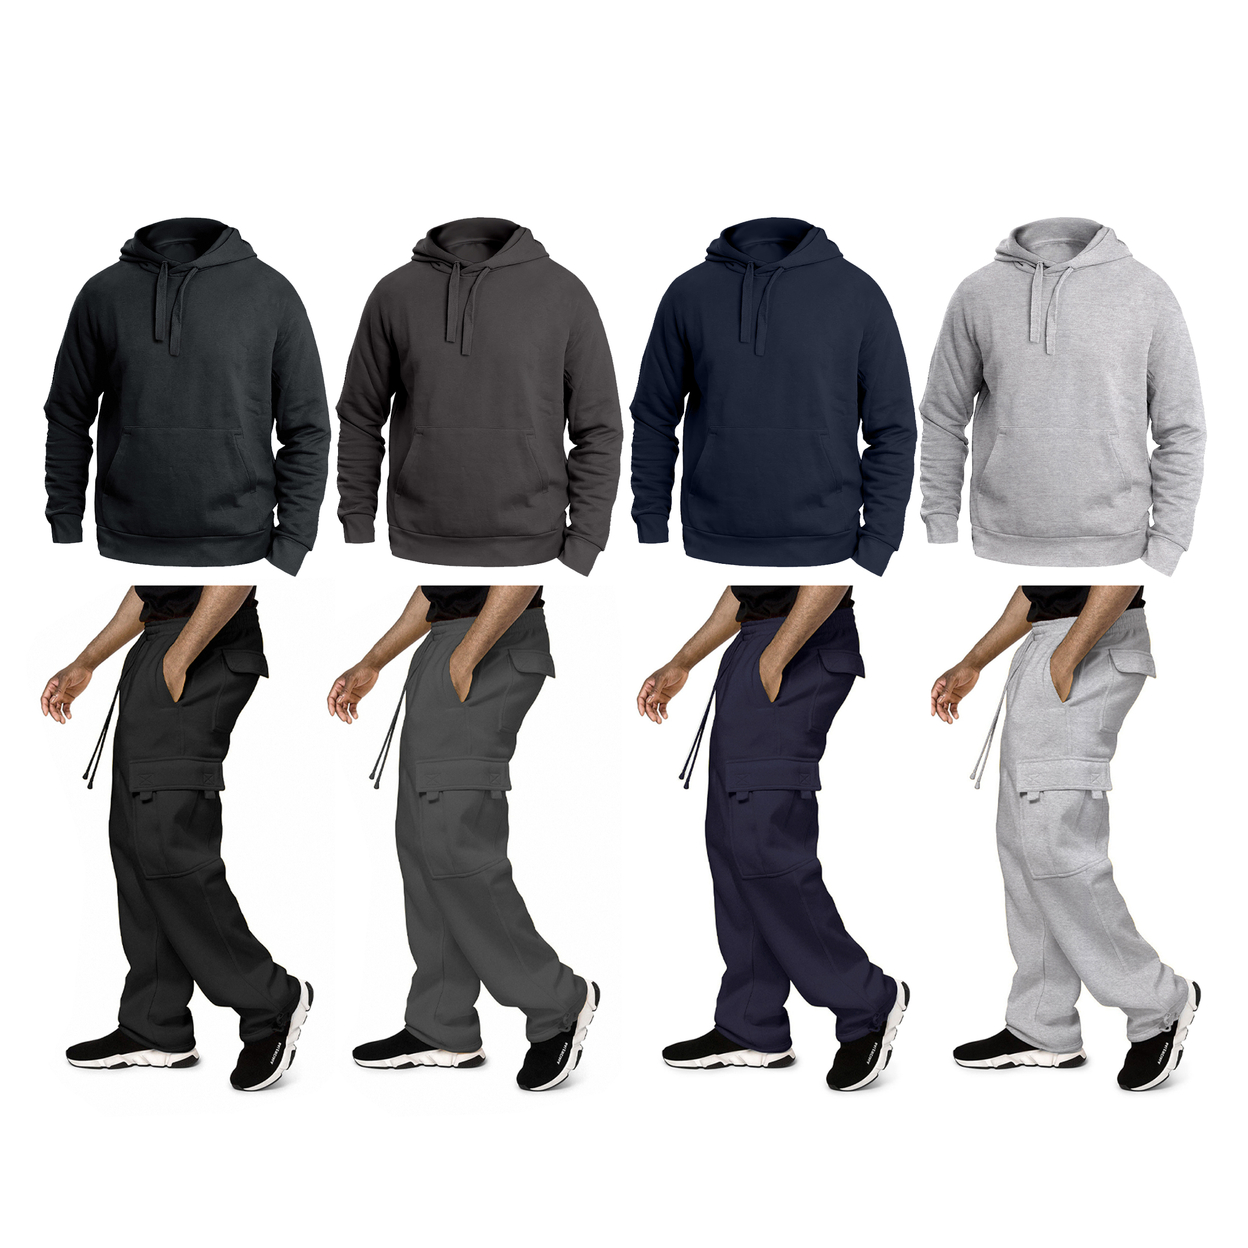 Men's Big & Tall Winter Warm Cozy Athletic Fleece Lined Multi-Pocket Cargo Sweatsuit - Black, 3xl